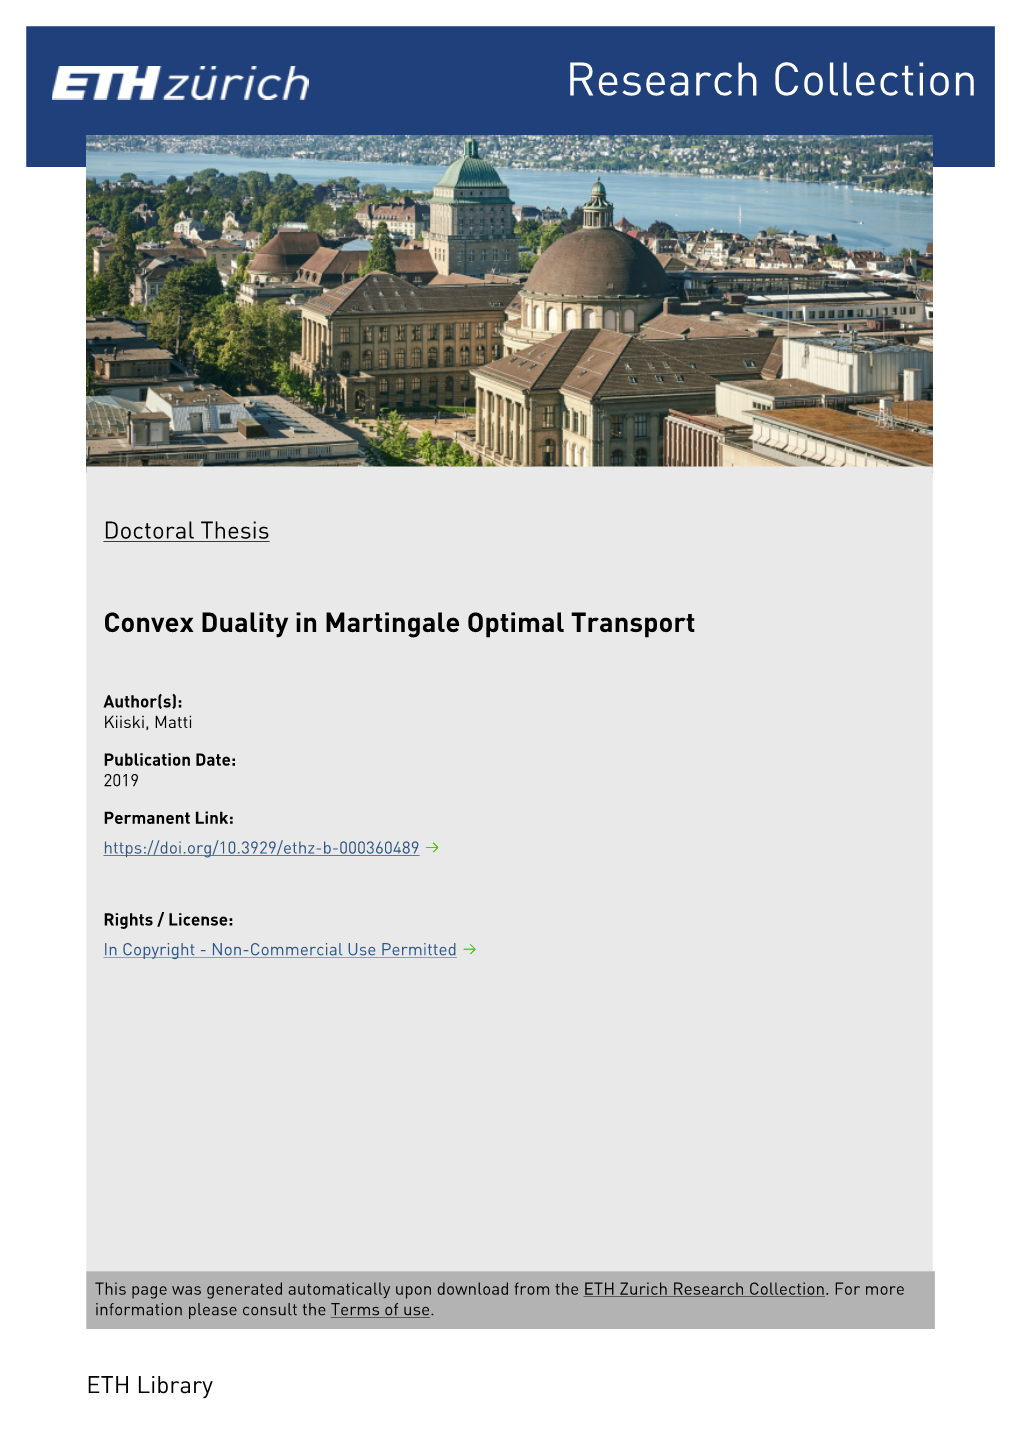 Chapter 3 Martingale Optimal Transport